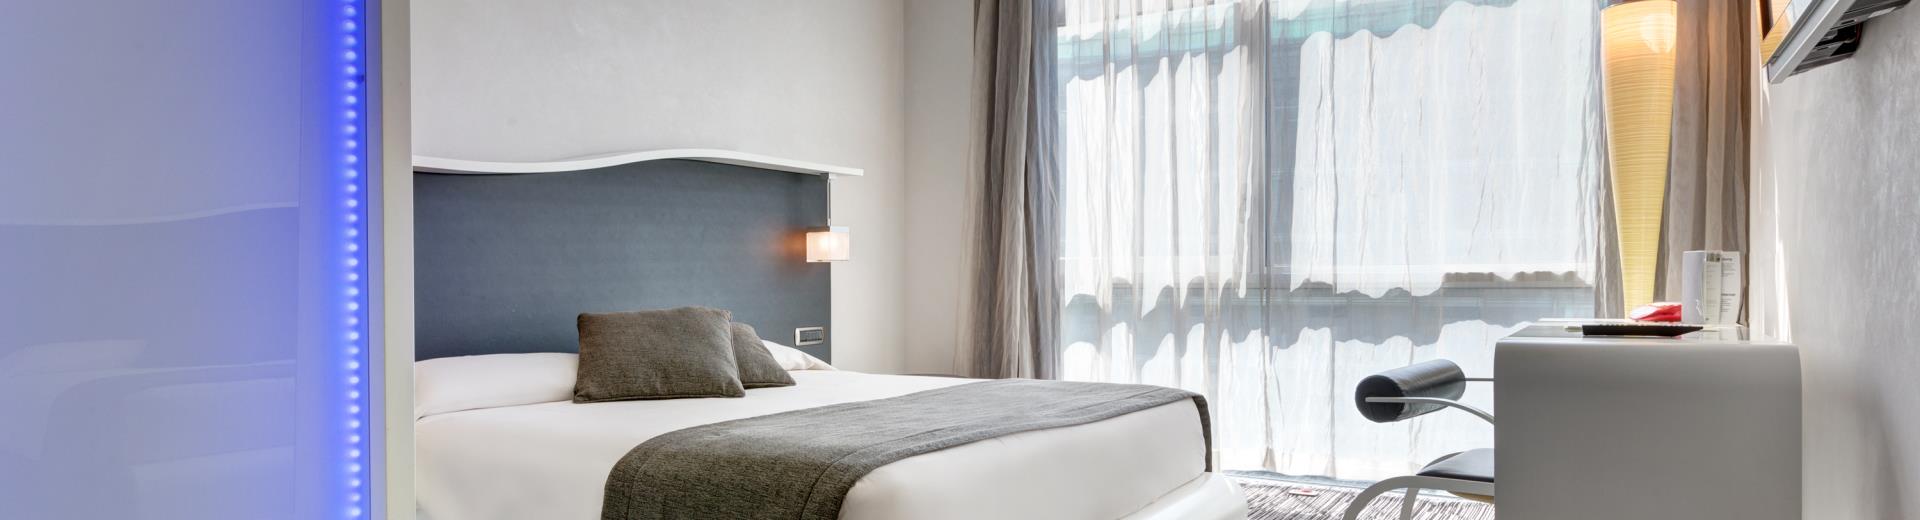 Double Comfort room-Hotel Royal Santina Rome 4 star hotel